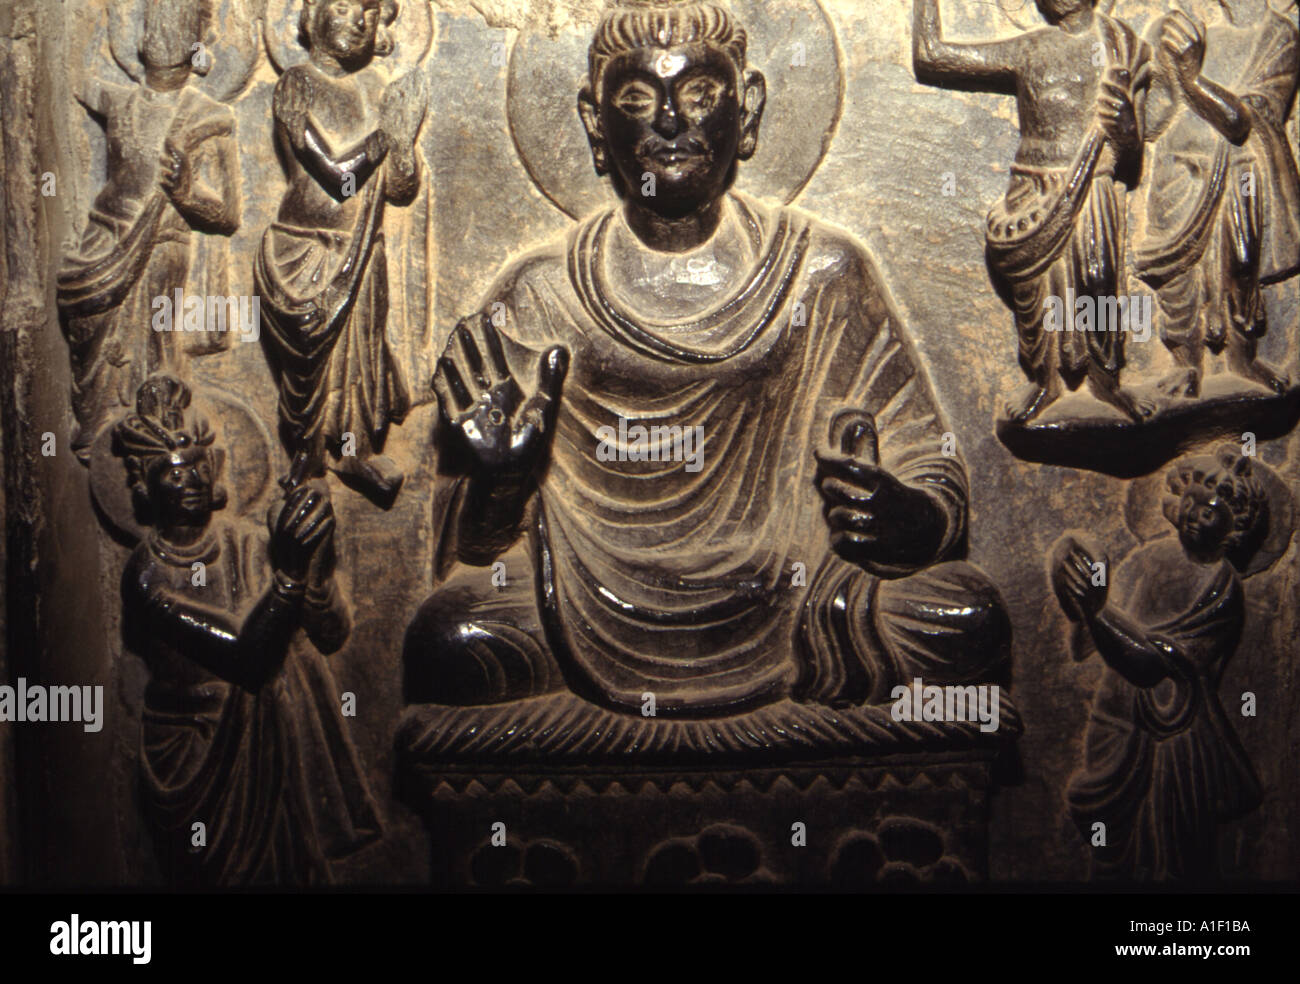 Sculpture of the fasting Buddha Gandharan civilisation Gandhara art, style of Buddhist visual art that developed between 1-7th century CE. Stock Photo